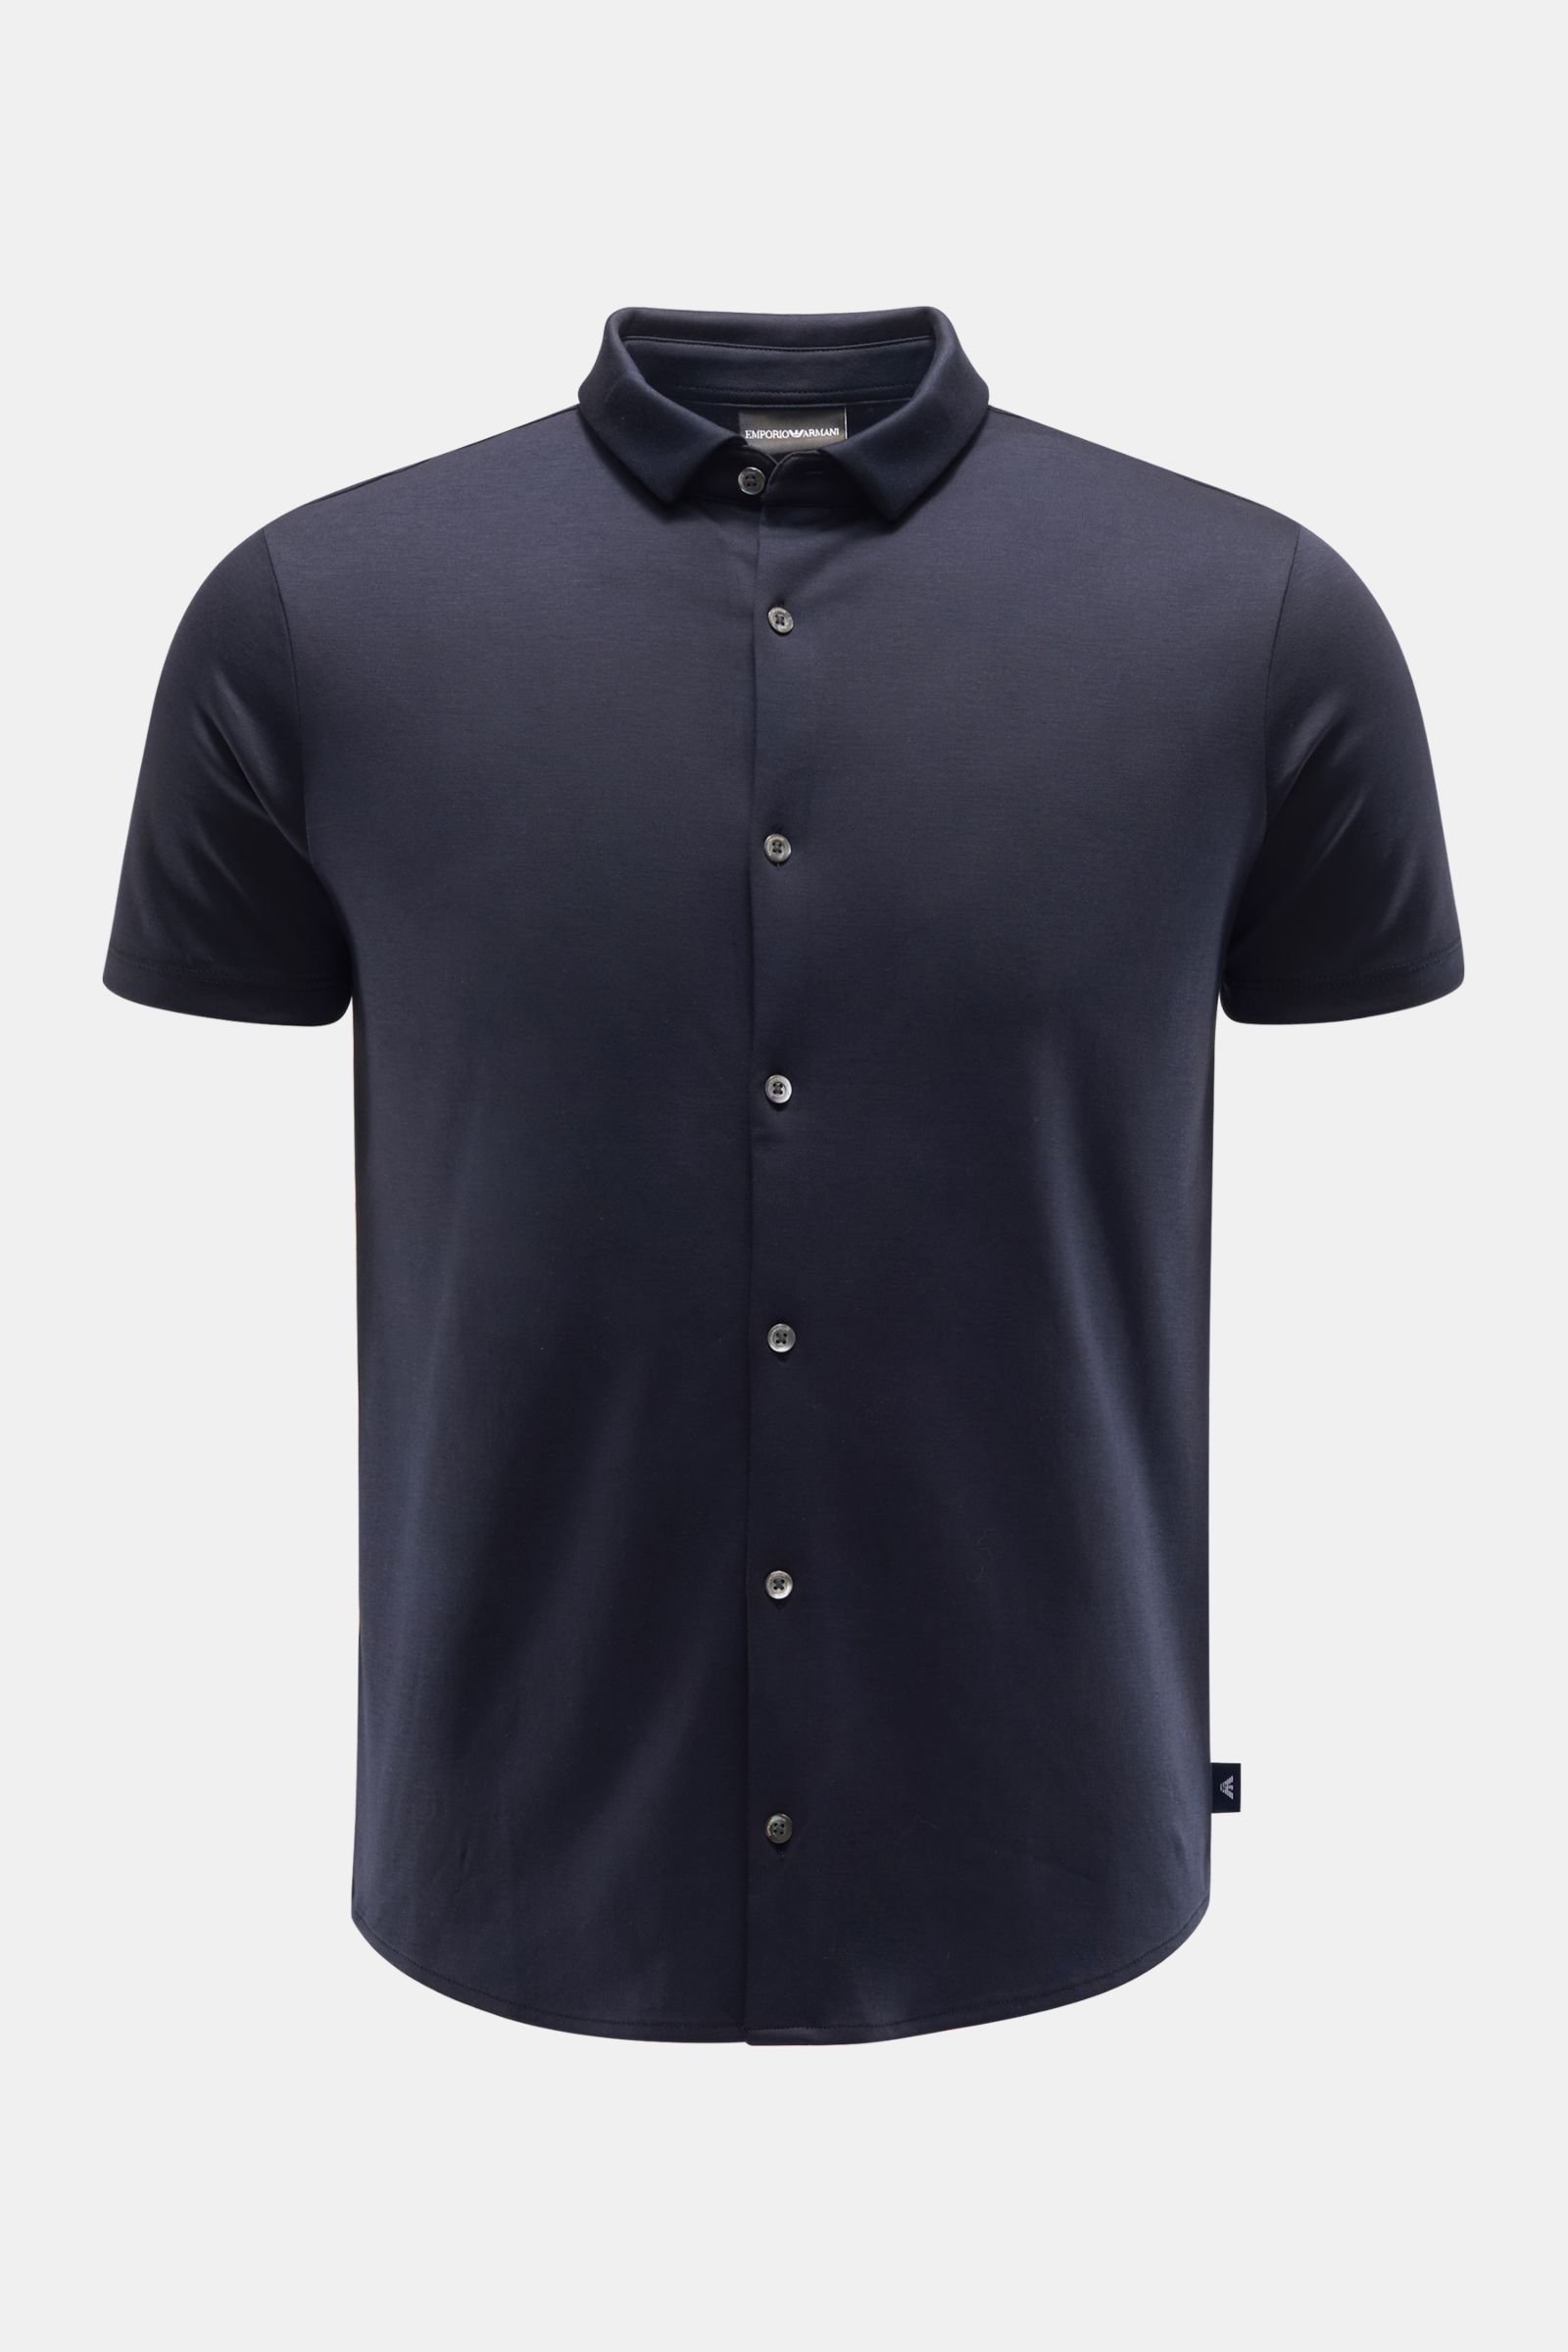 Jersey short-sleeve shirt slim collar navy